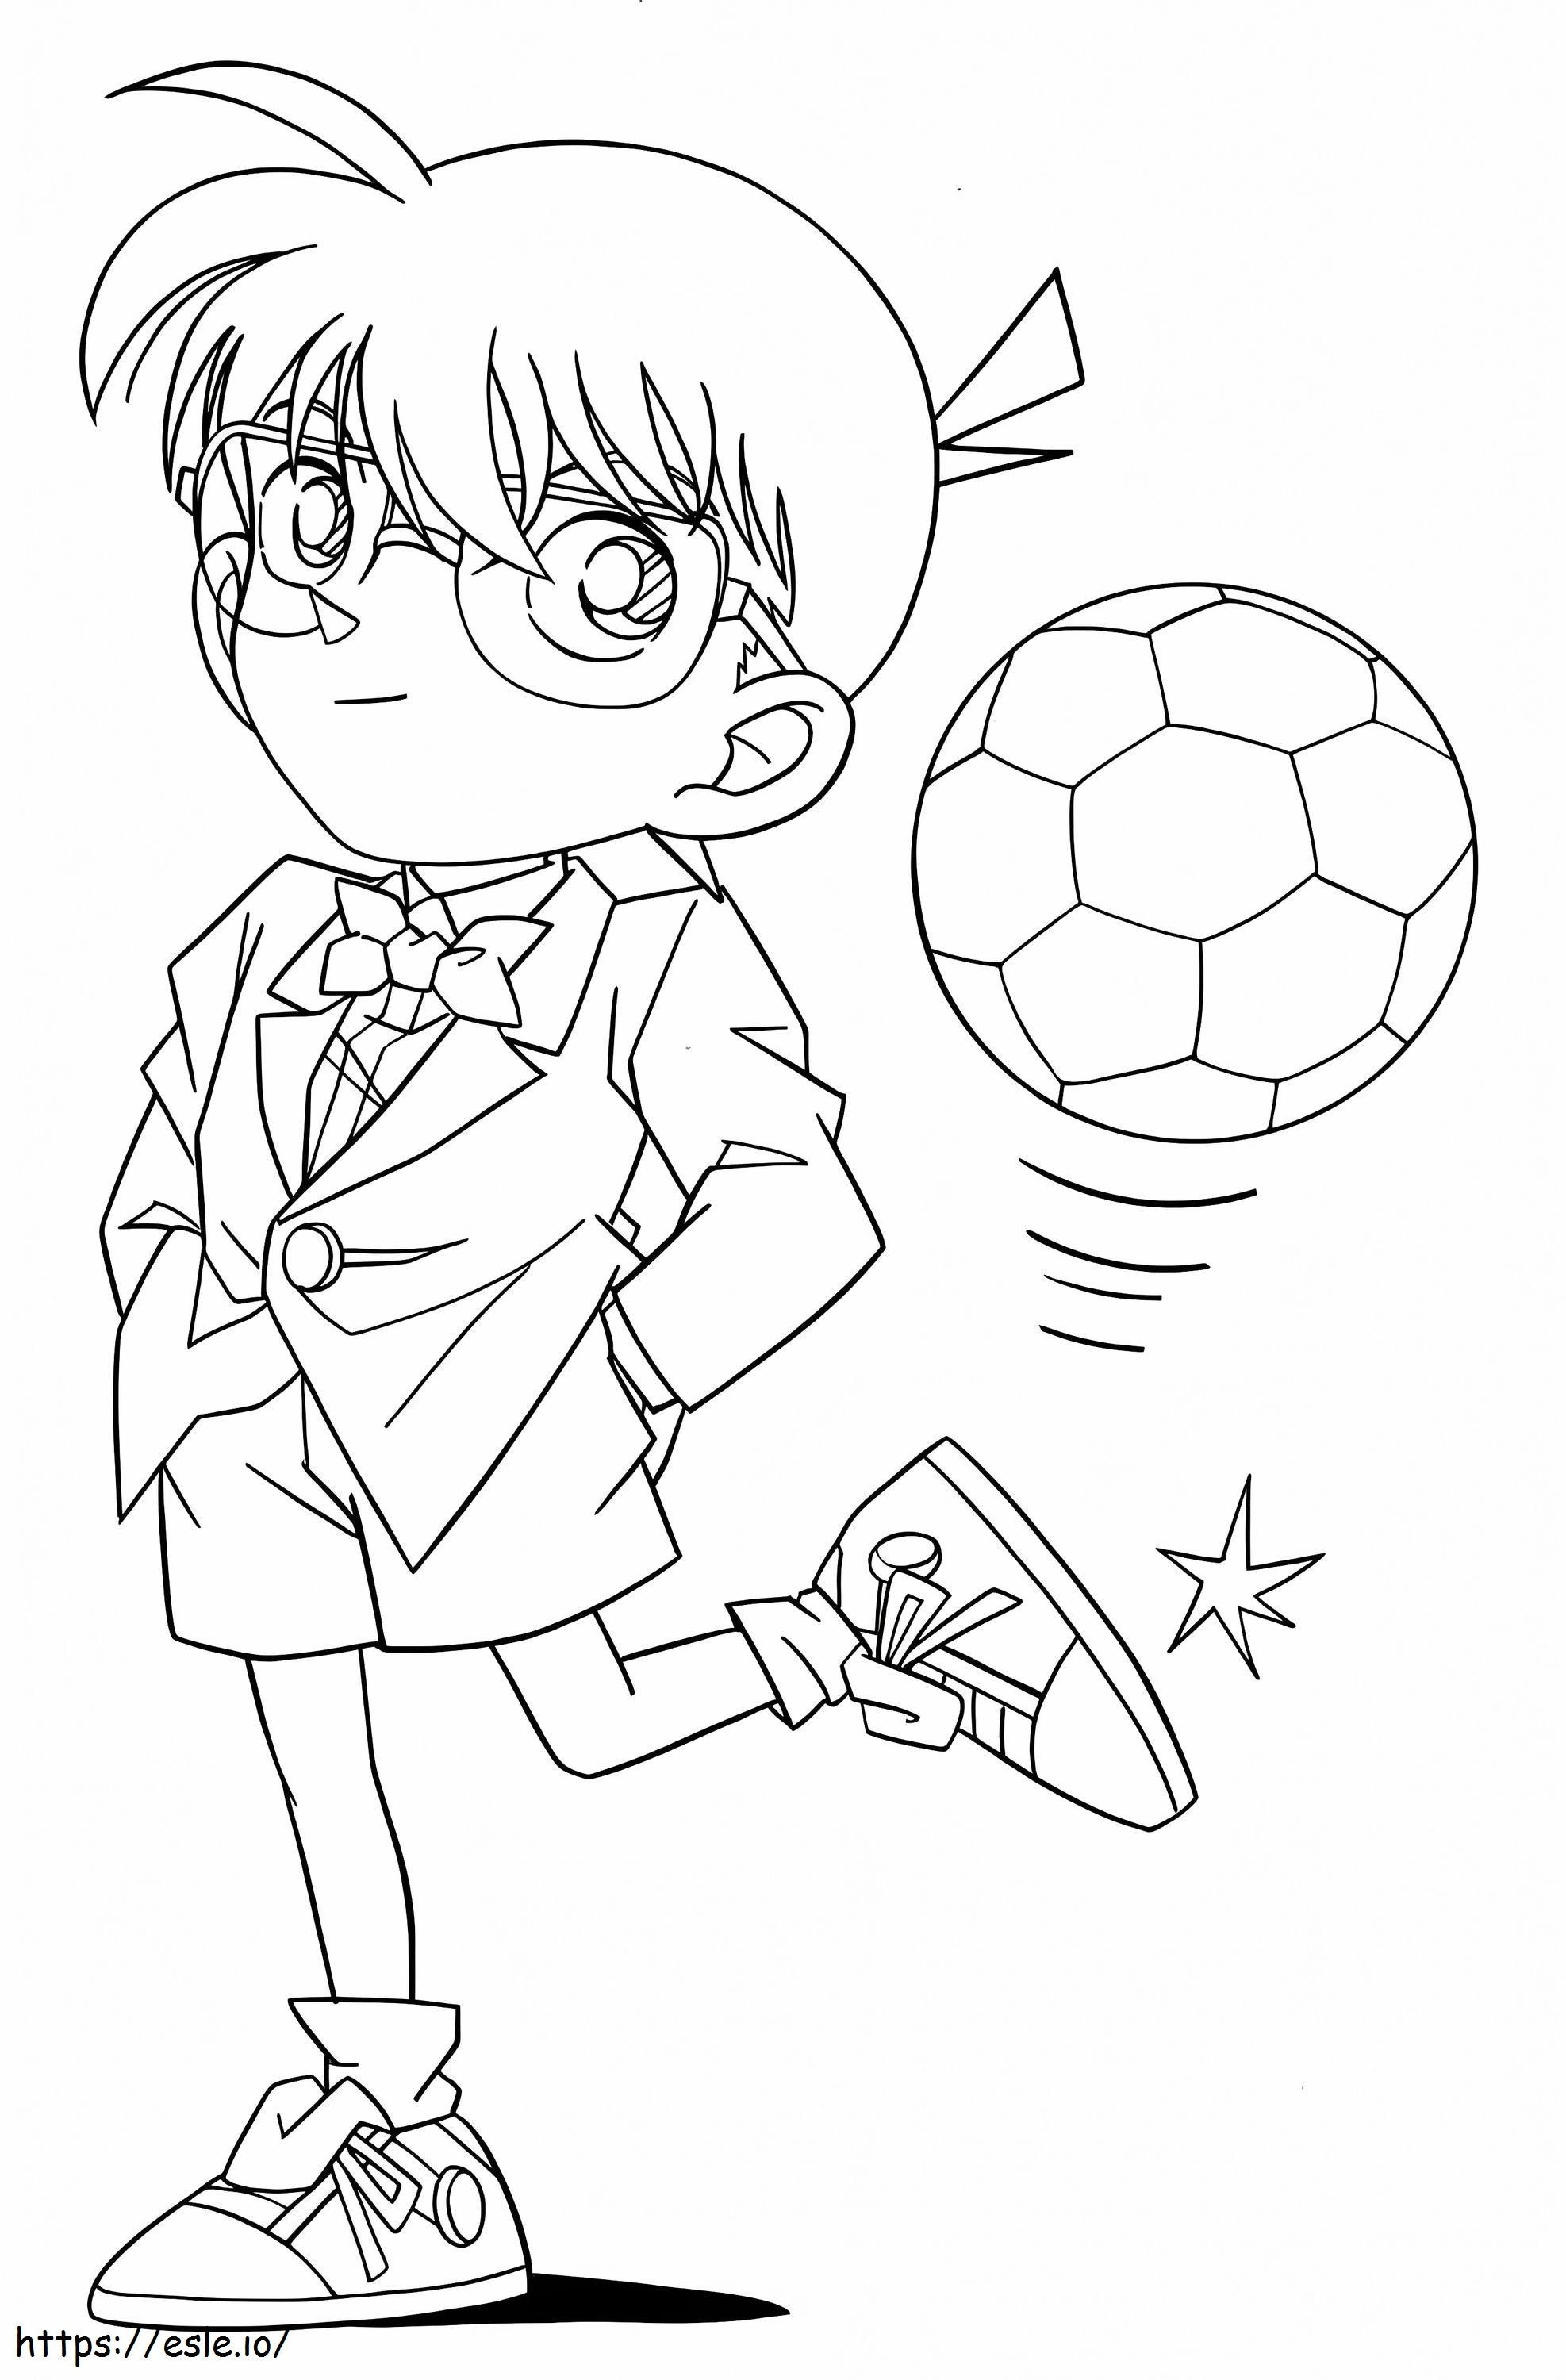 Conan Kicks A Soccer Ball coloring page